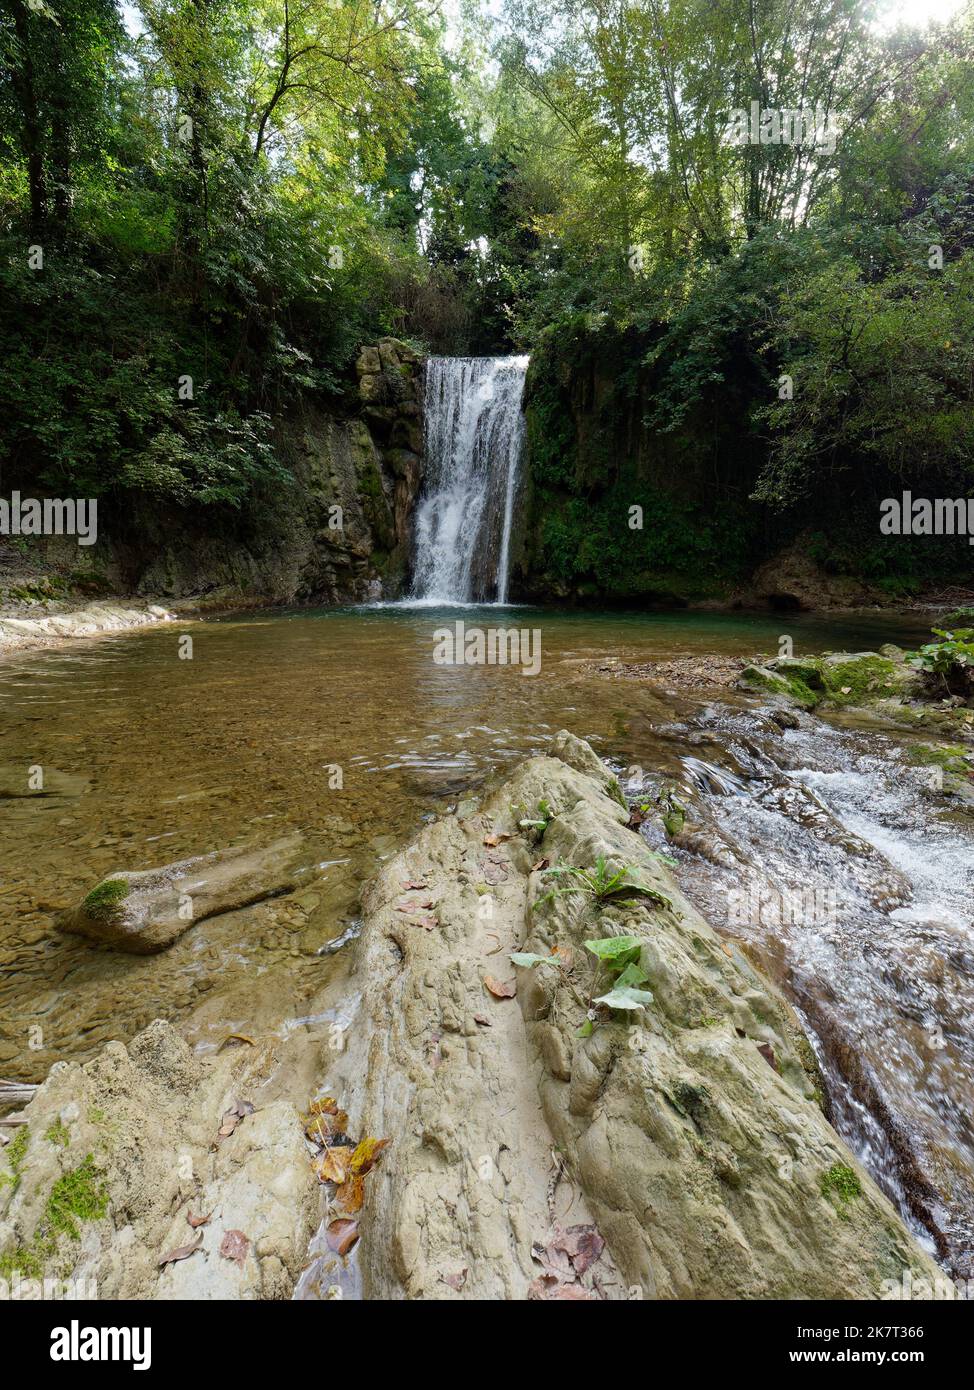 Wasserfall in der Nähe der Stadt Coccore in der Region Le Marche in Italien Stockfoto